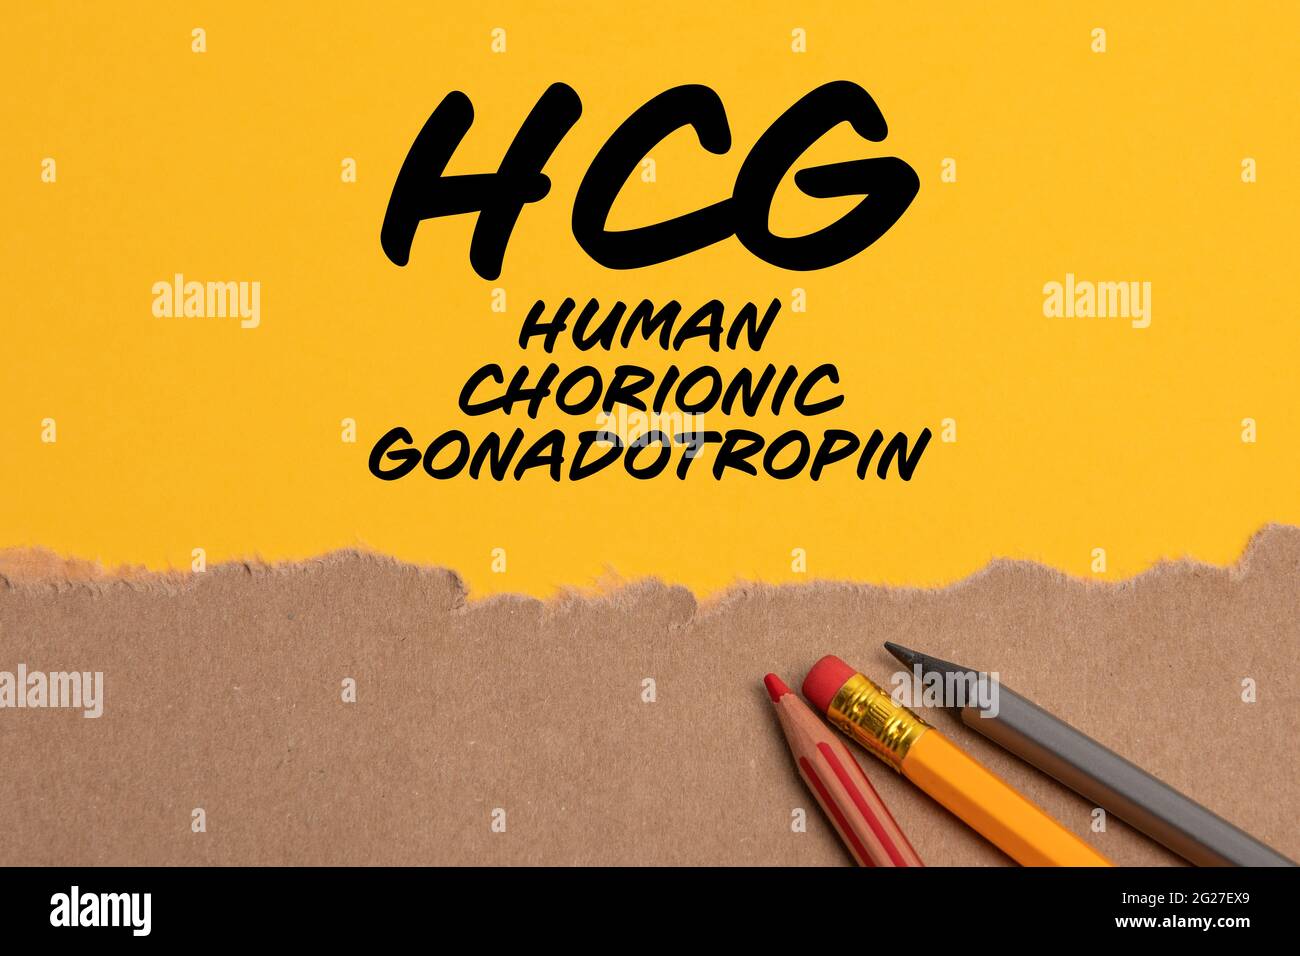 HCG human chorionic gonadotropin. Torn cardboard paper on yellow background. Stock Photo